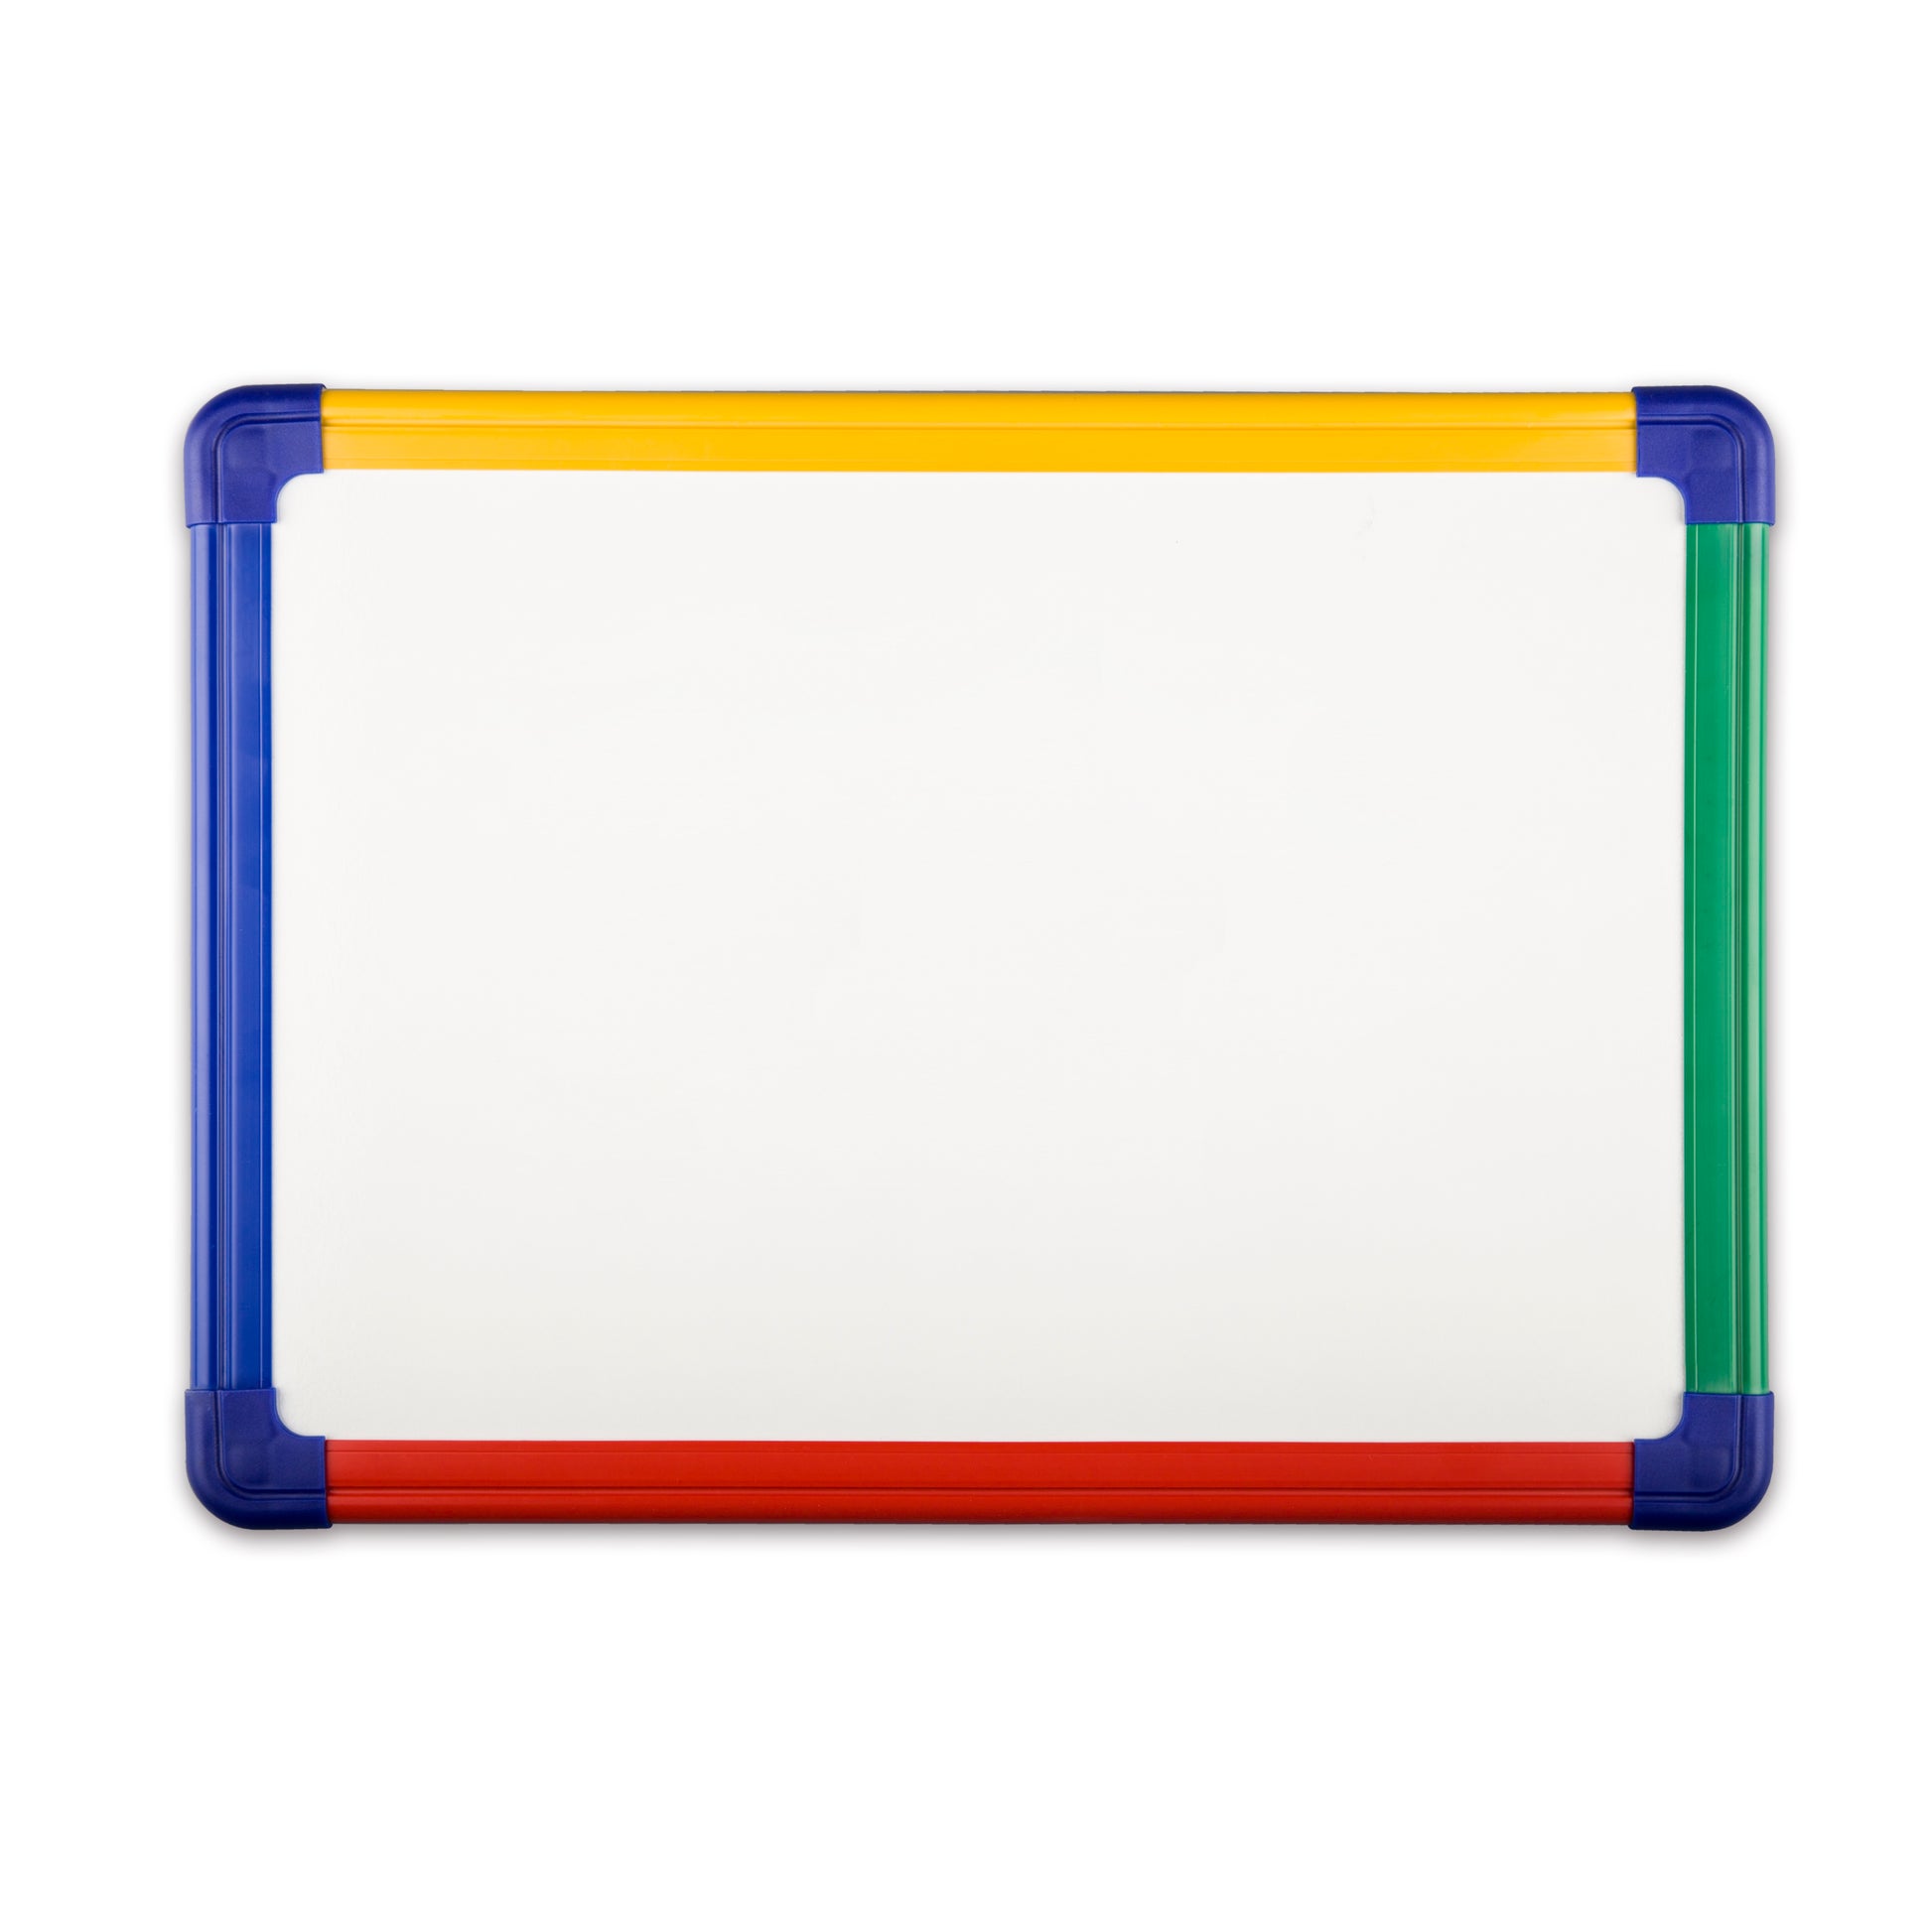 M05 plastic colorful frame mini dry erase board for students, kids - Premium dry erase lapboard from Madic Whiteboard Factory - Madic Whiteboard Factory